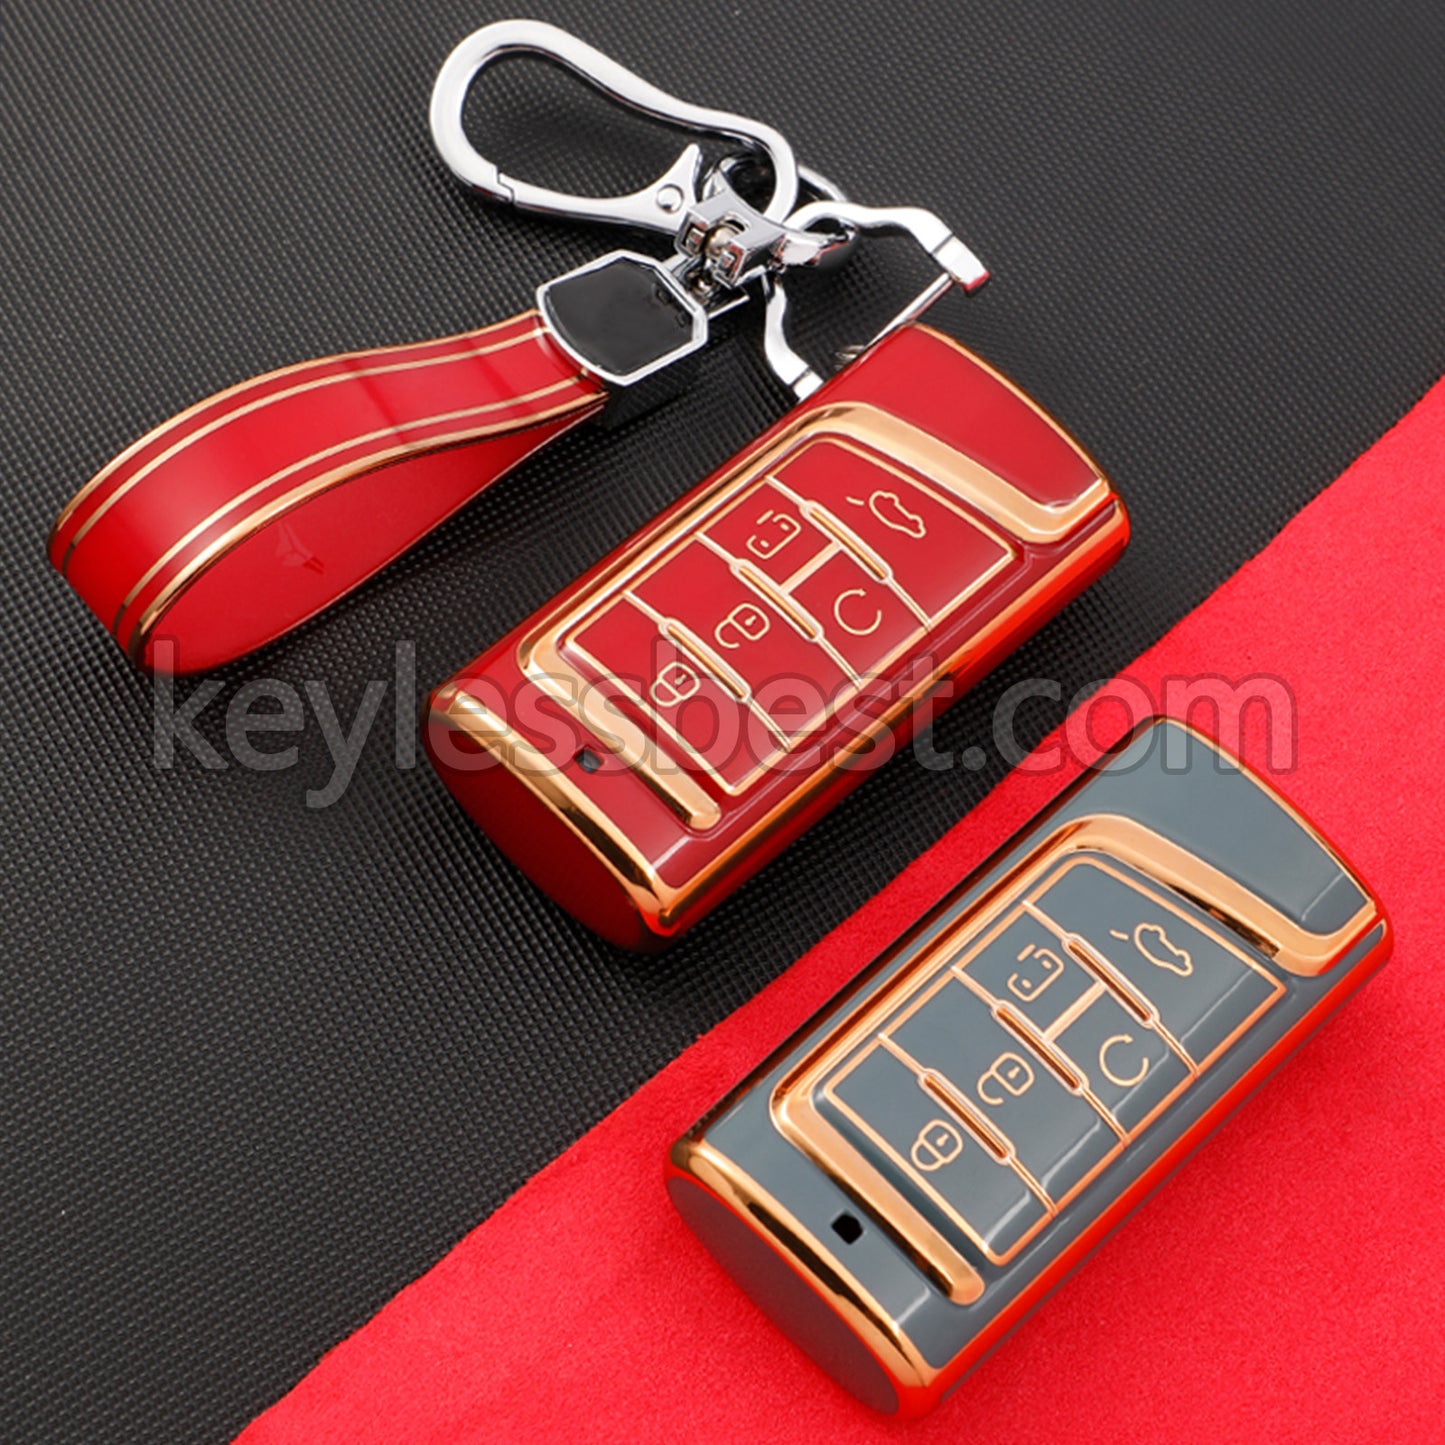 TPU Car Key cover For Tumpchi Car Key cover case holder